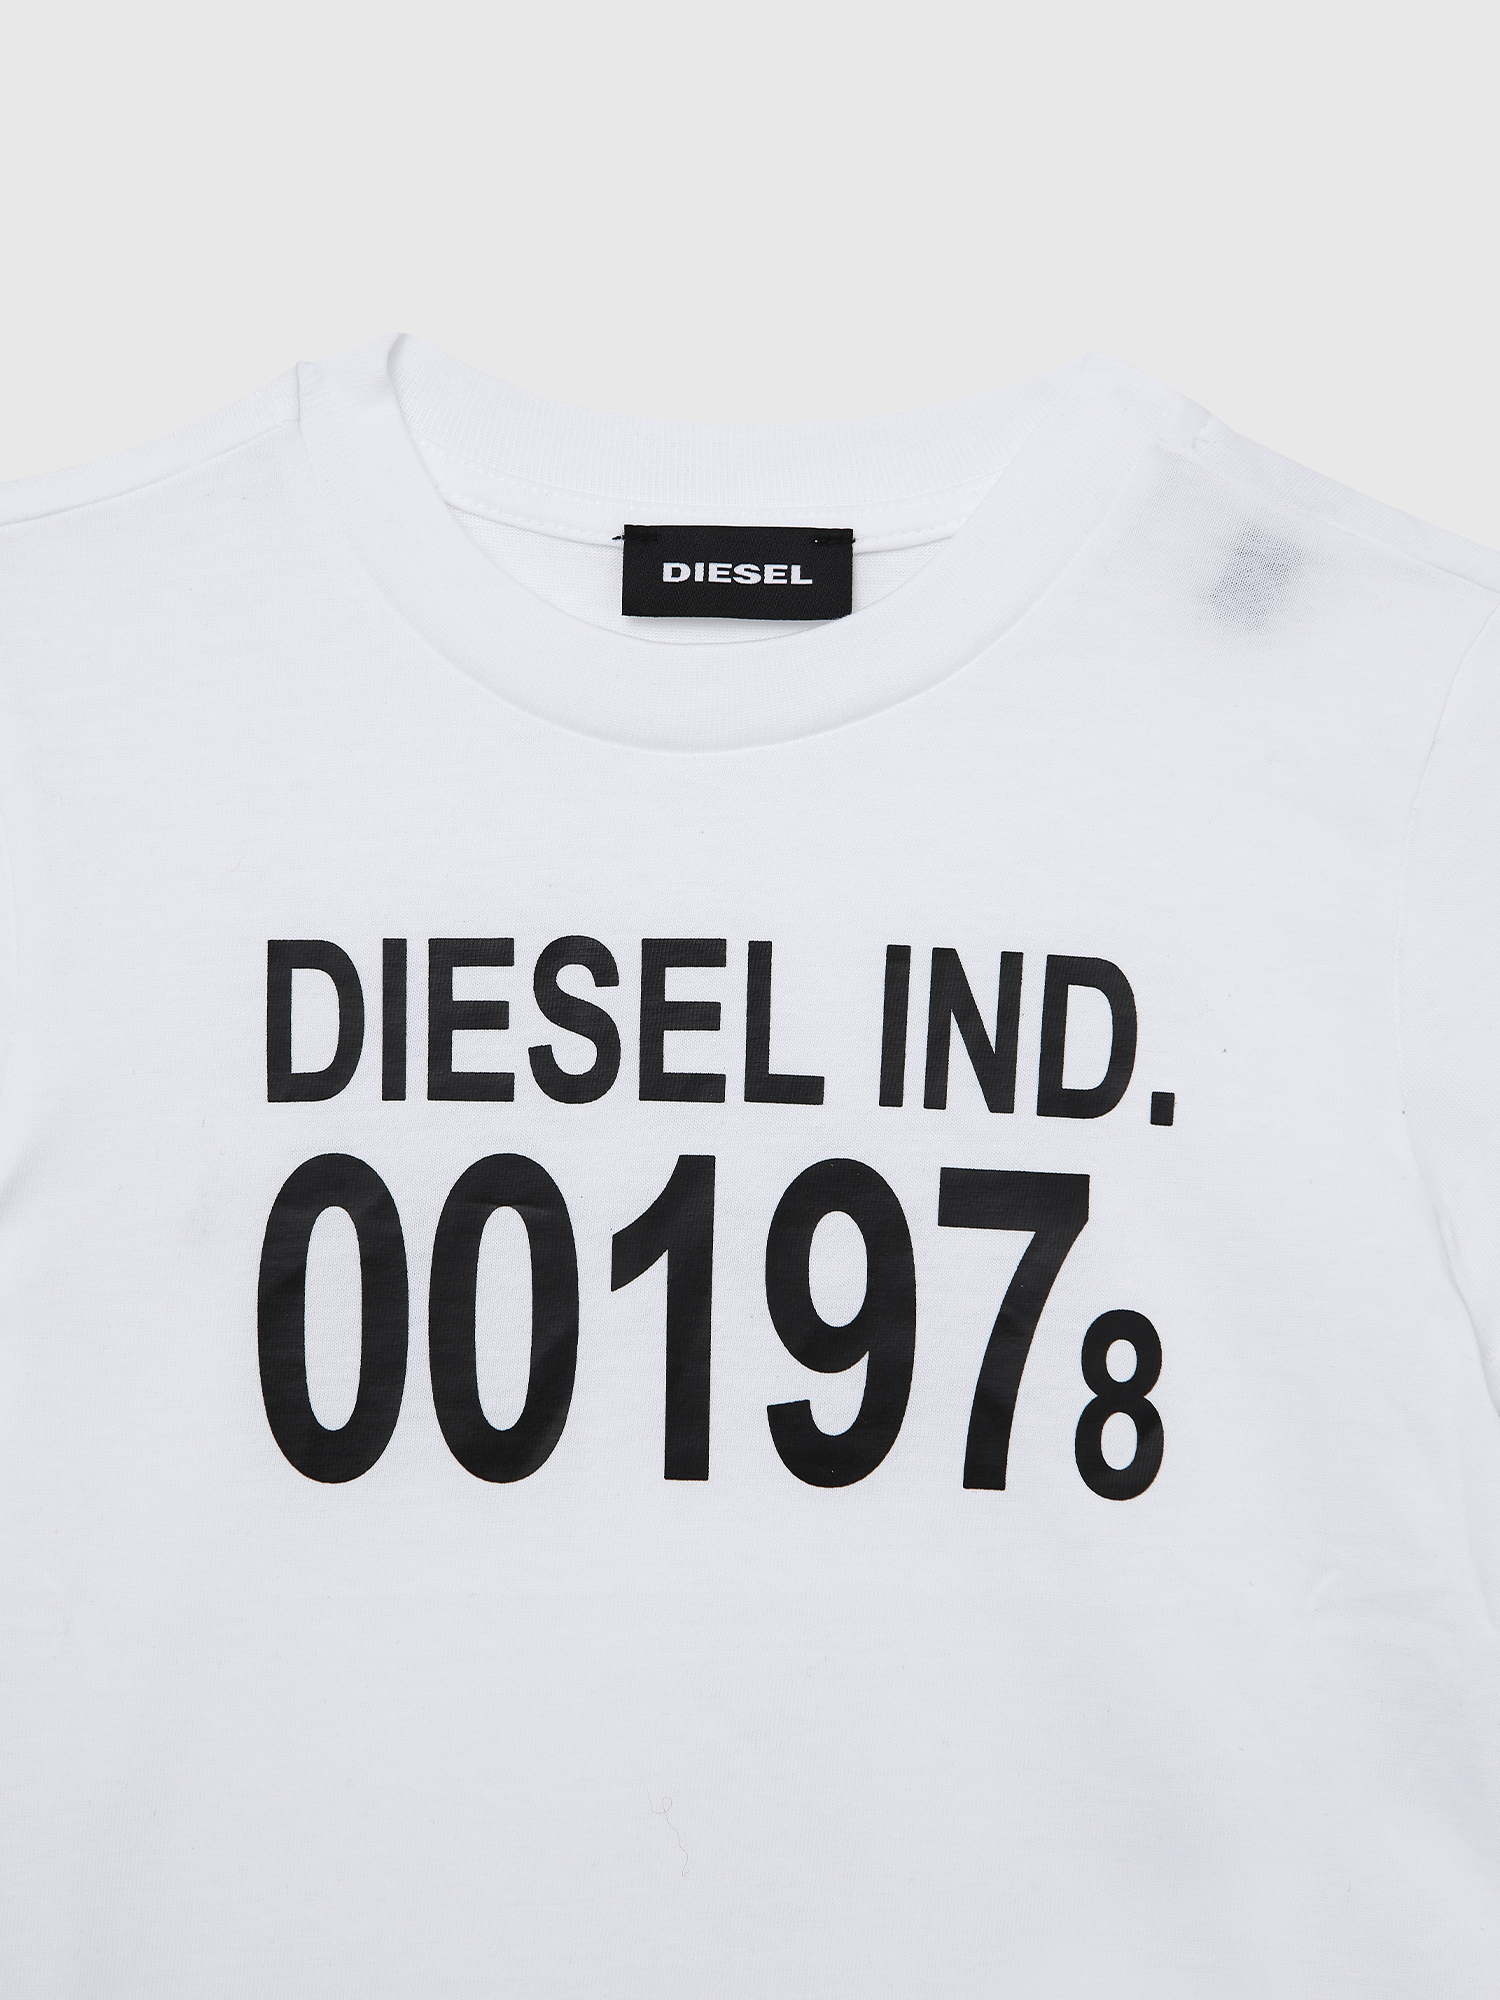 Diesel - TDIEGO001978B-R, White/Black - Image 3